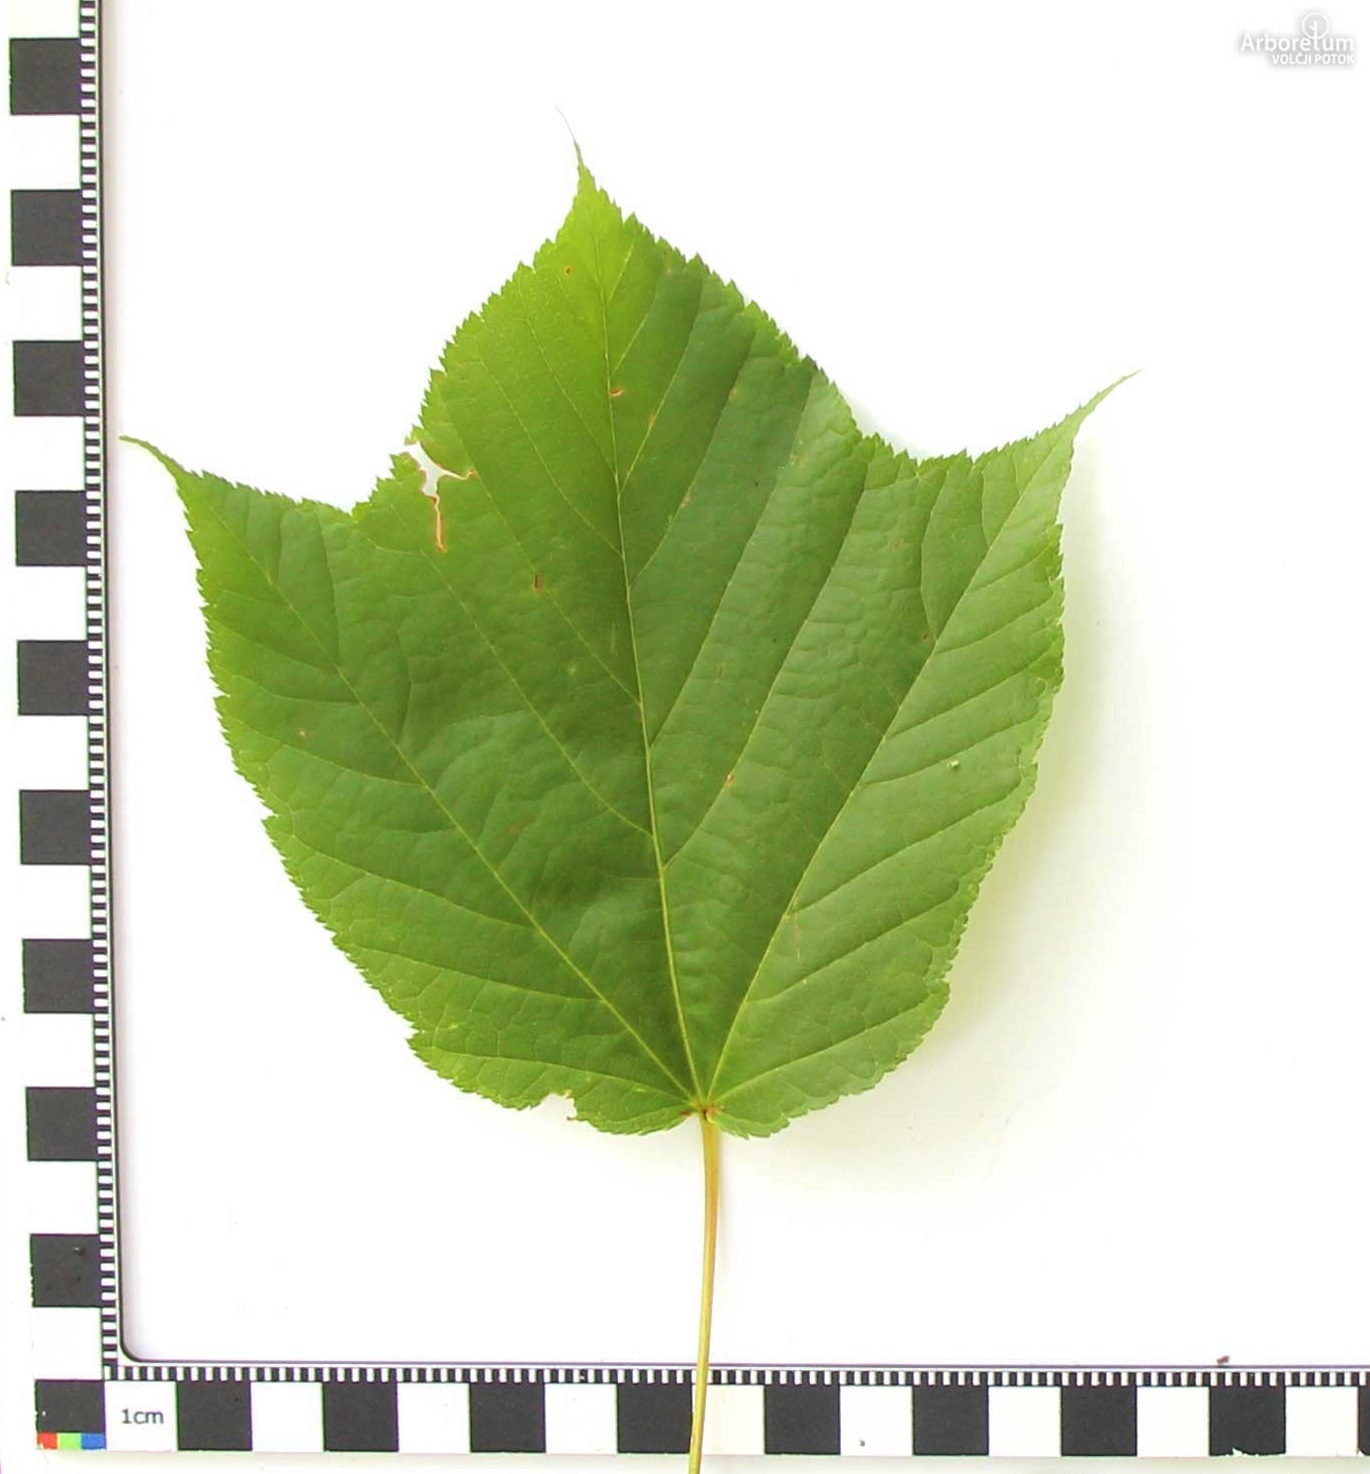 Acer davidii subsp. grosseri 